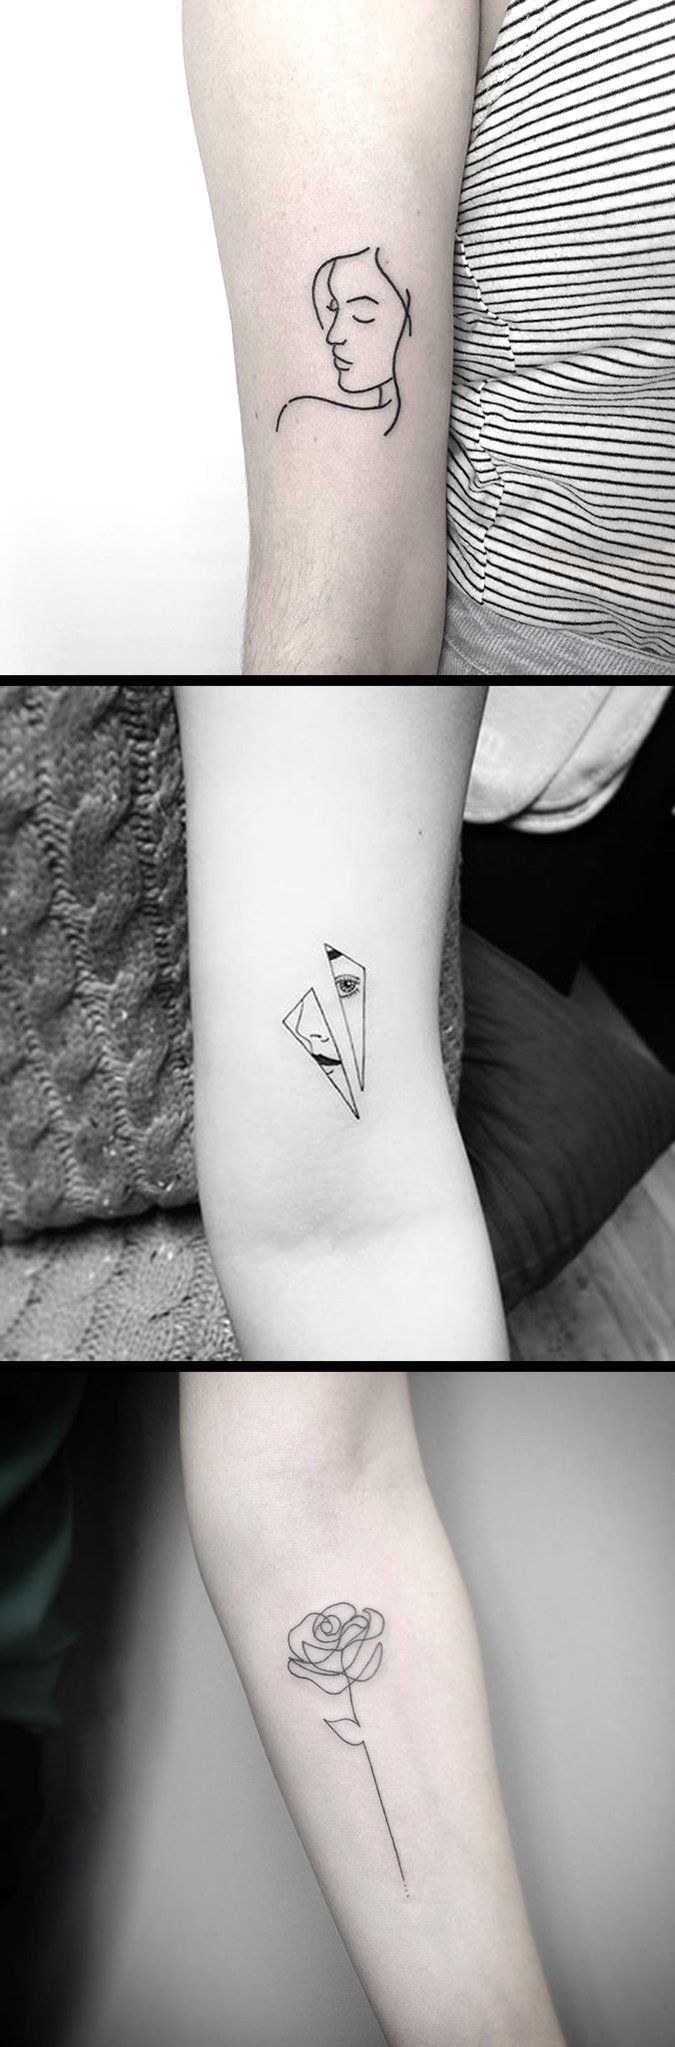 Geometric Tattoo - Small Tattoo Ideas with Meaning at MyBodiArt.com